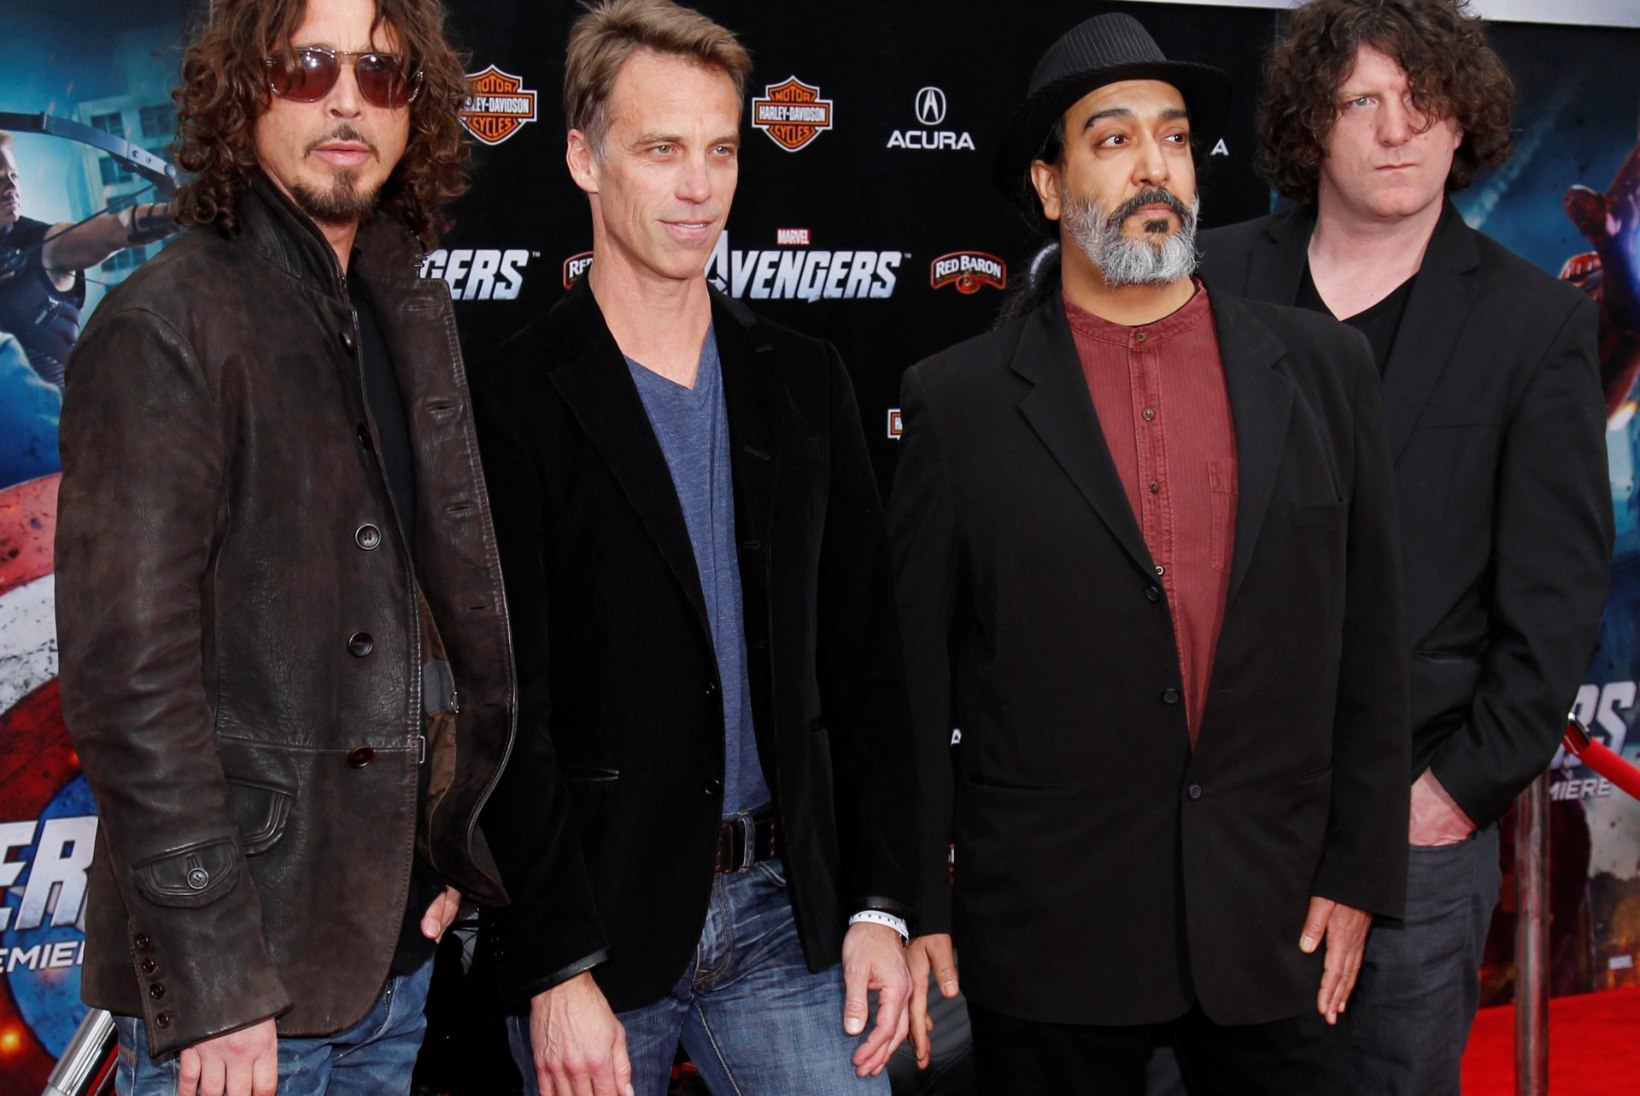 Politsei kinnitab, et Soundgardeni rokkar võttis endalt ise elu